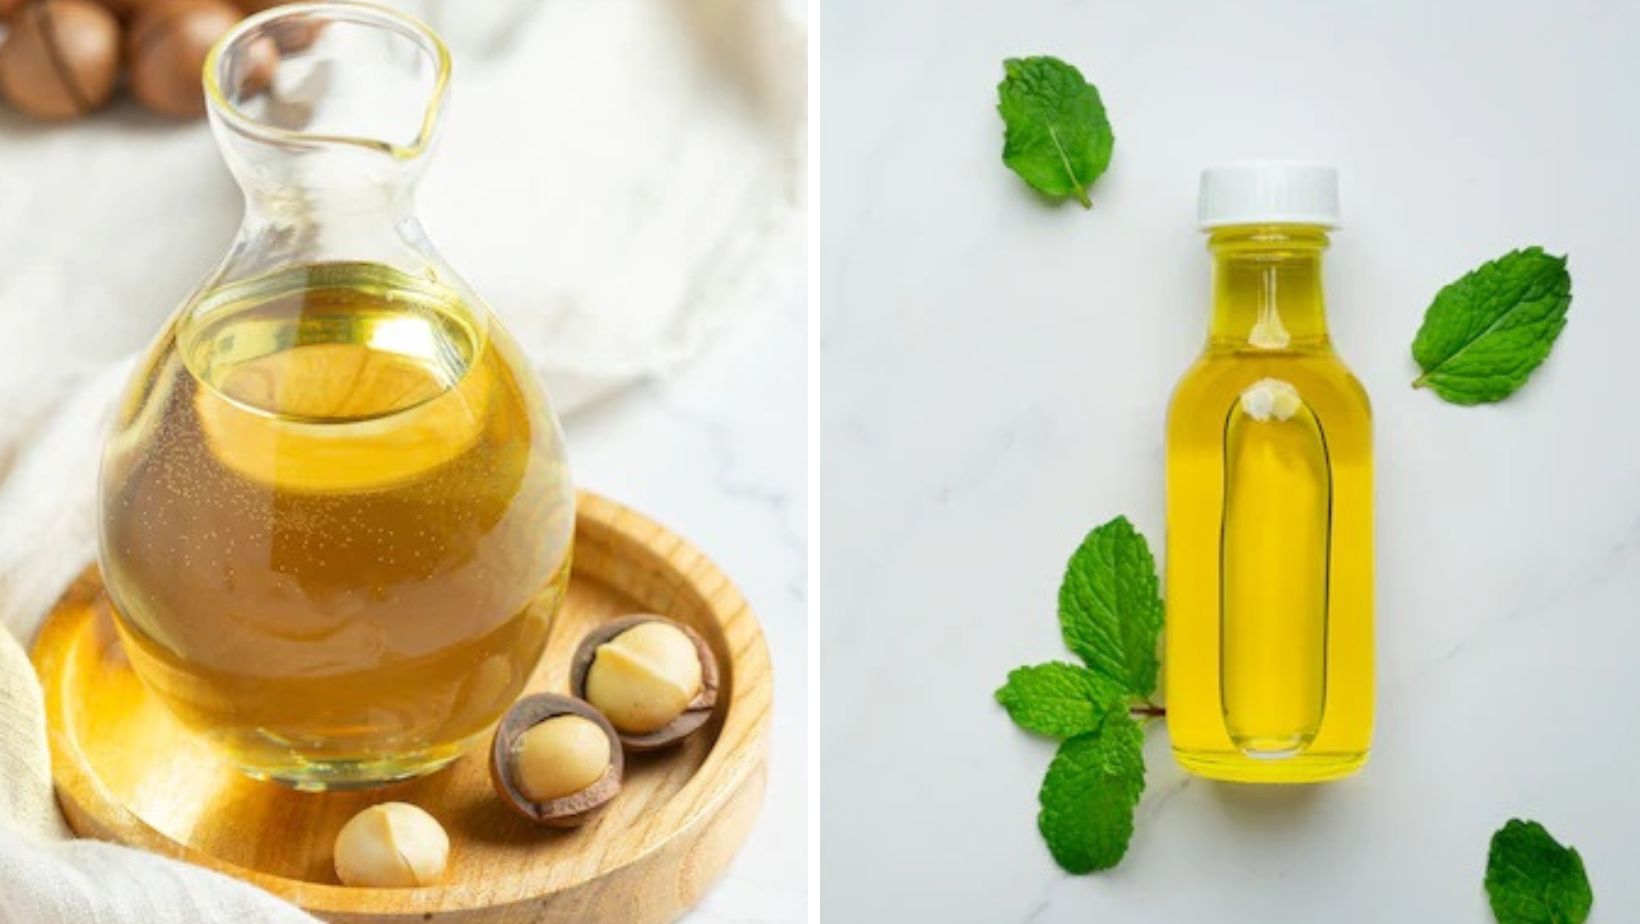 40 Manfaat minyak zaitun untuk wajah, rambut, dan tubuh, lengkap dengan cara pakainya